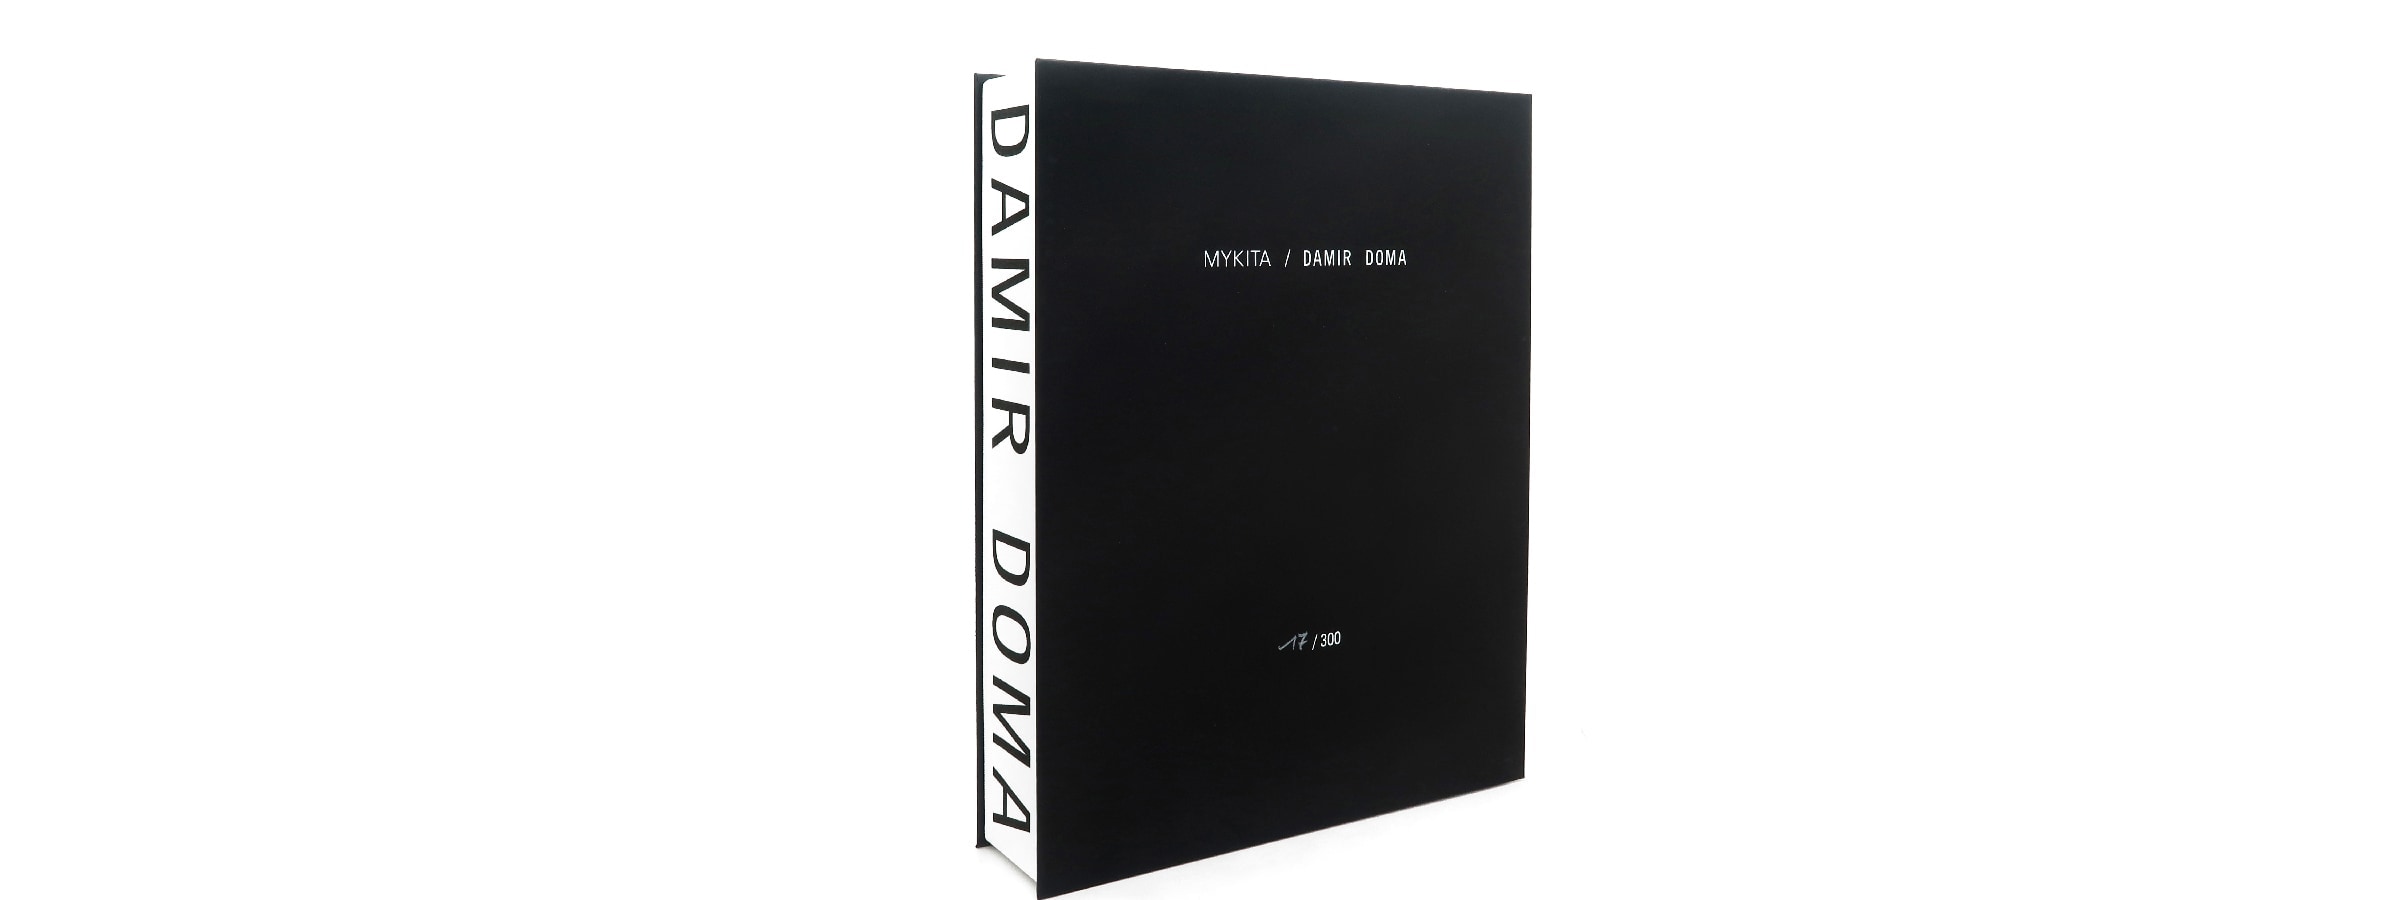 MYKITA / DAMIR DOMA Limited Edition Set CHARLOTTE Antique-White/Black全体像